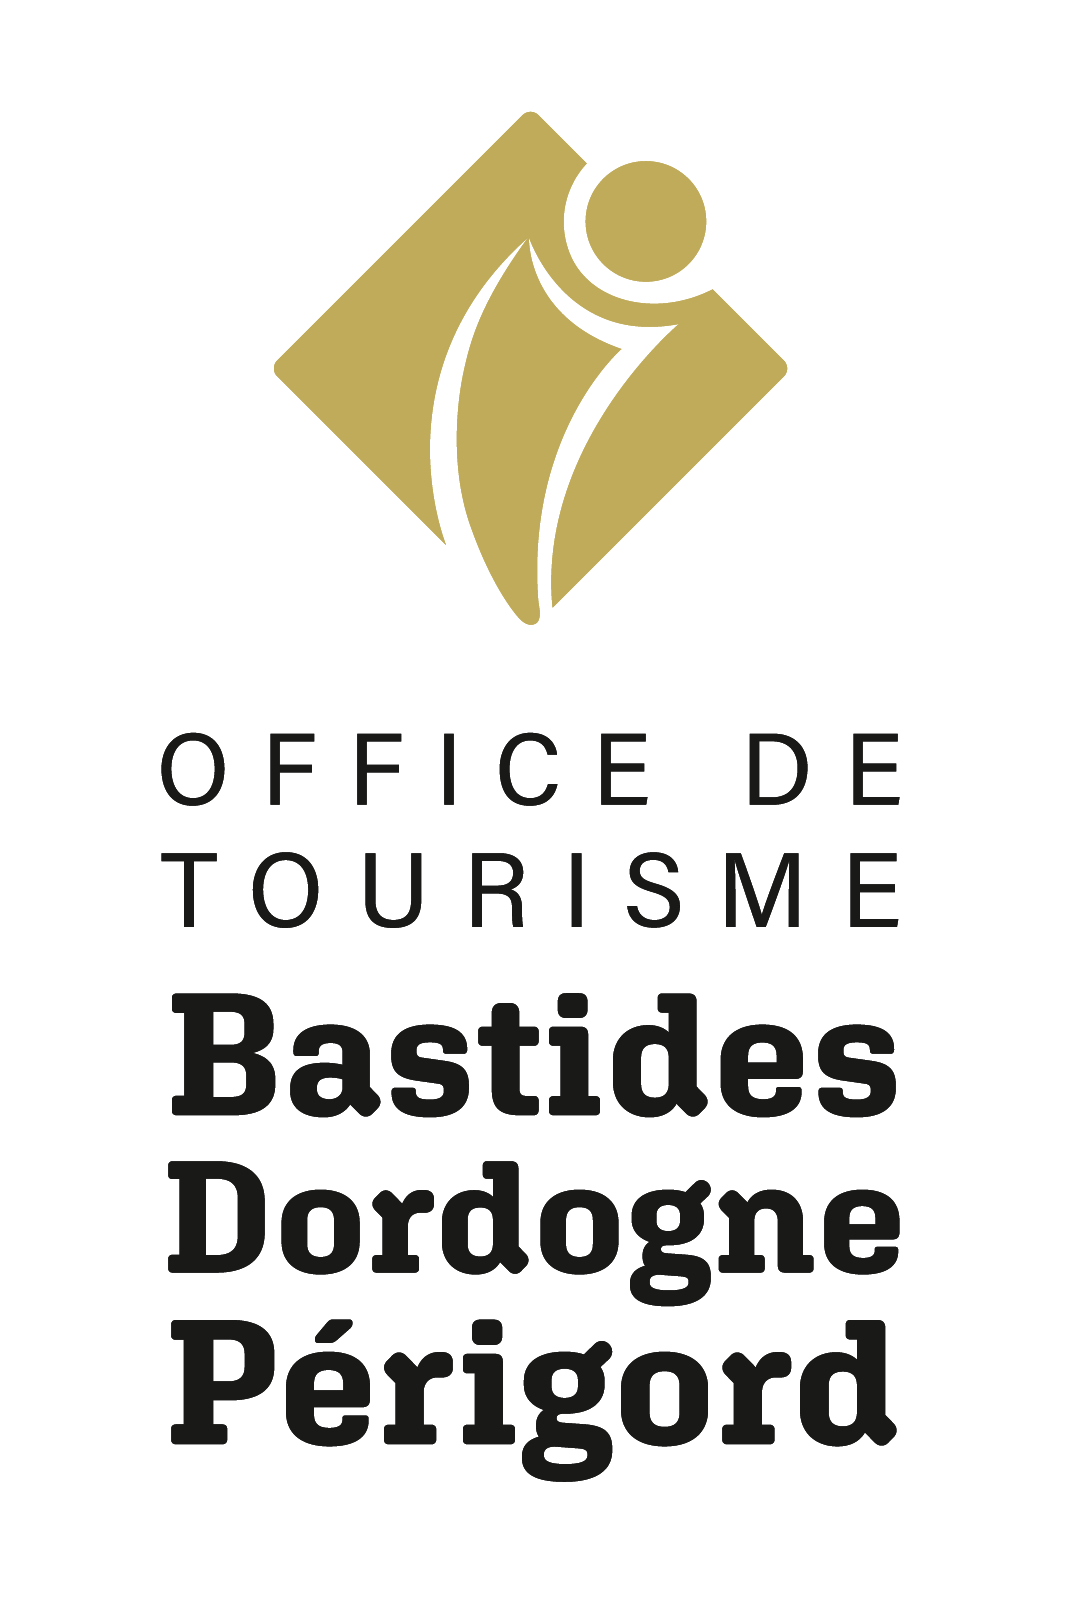 Office de tourisme des Bastides Dordogne-Périgord